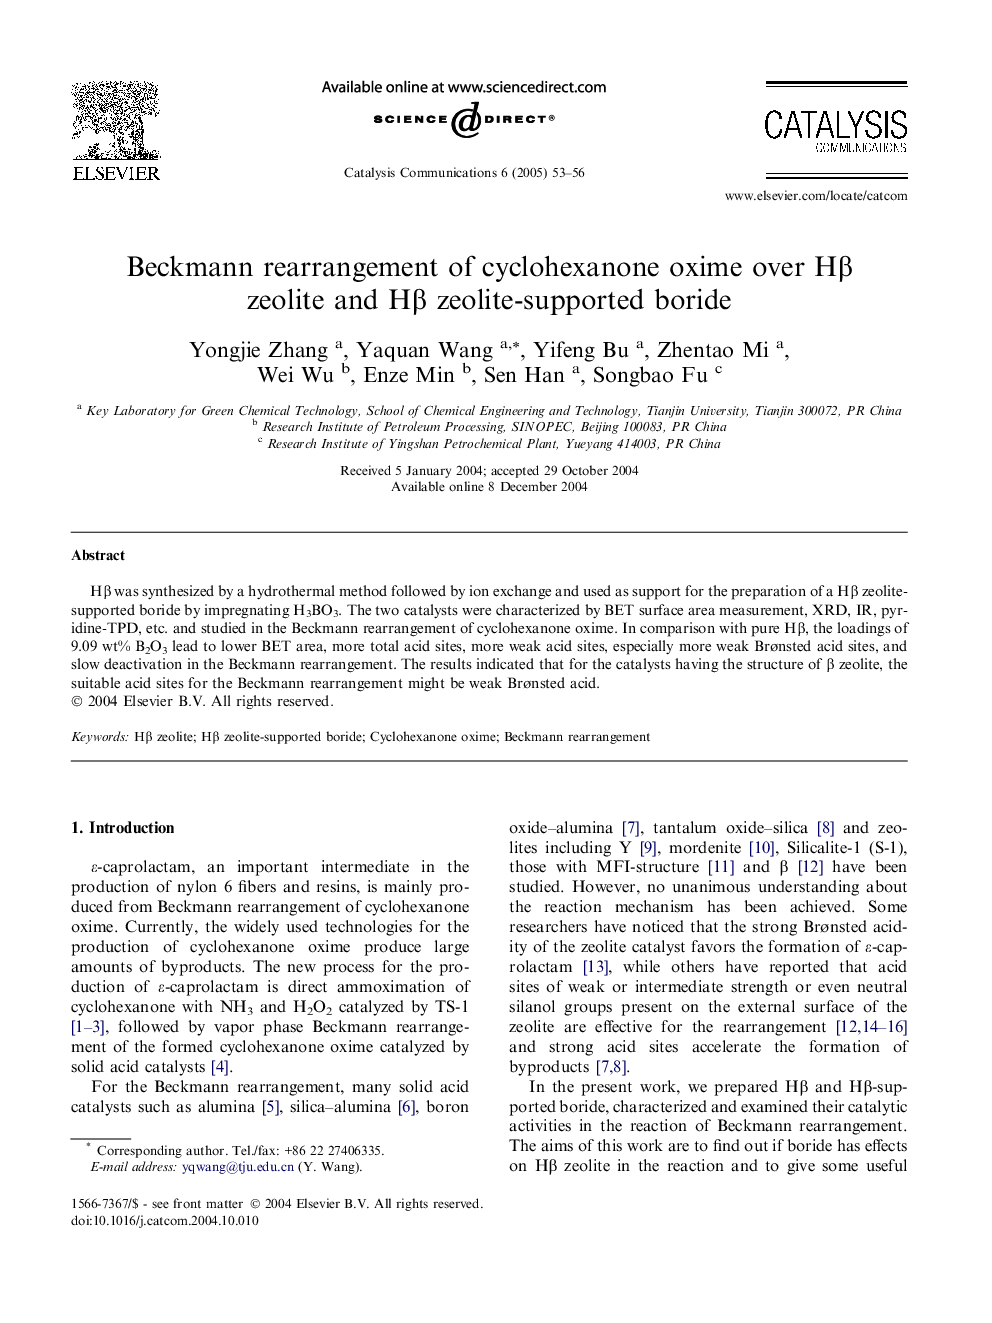 Beckmann rearrangement of cyclohexanone oxime over HÎ² zeolite and HÎ² zeolite-supported boride